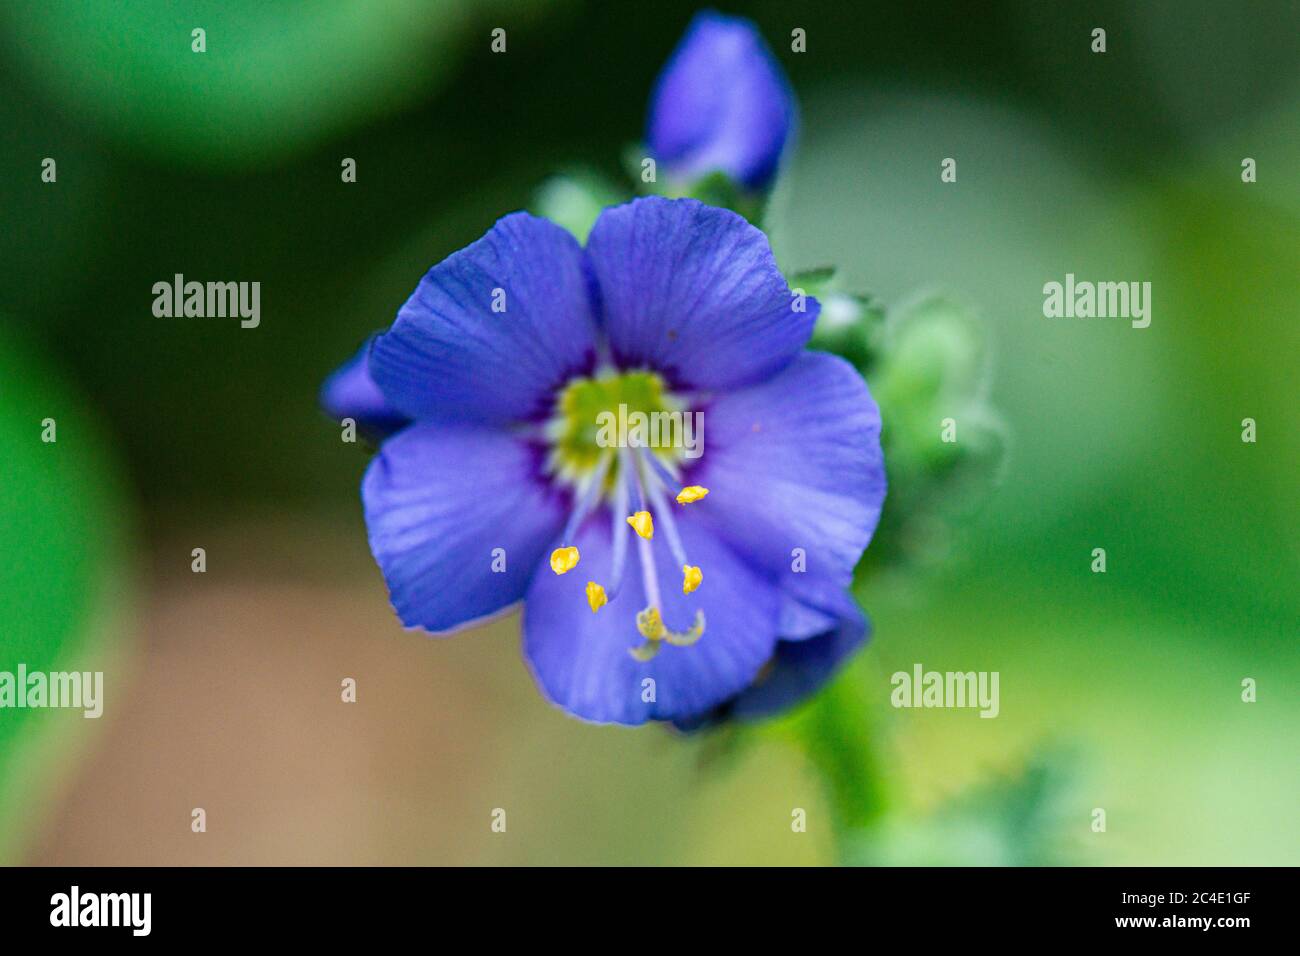 The flower of a Jacob's ladder (Polemonium caeruleum) Stock Photo